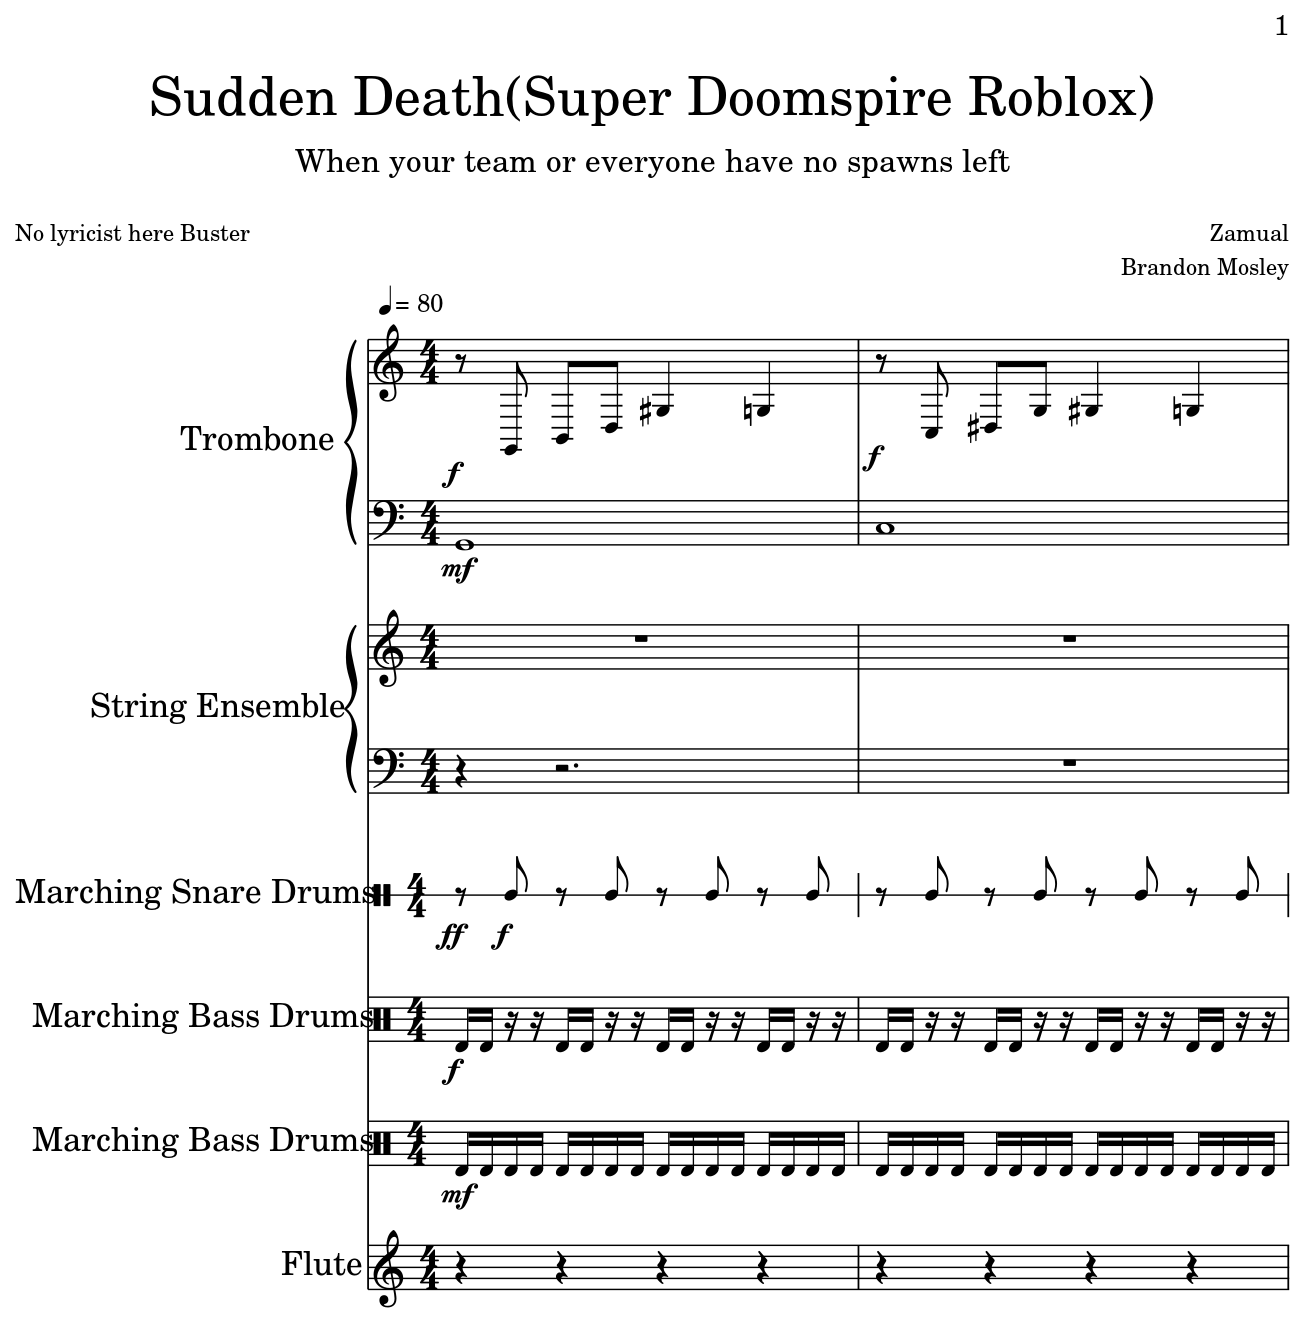 Sudden Death Super Doomspire Roblox Flat - roblox marching drum